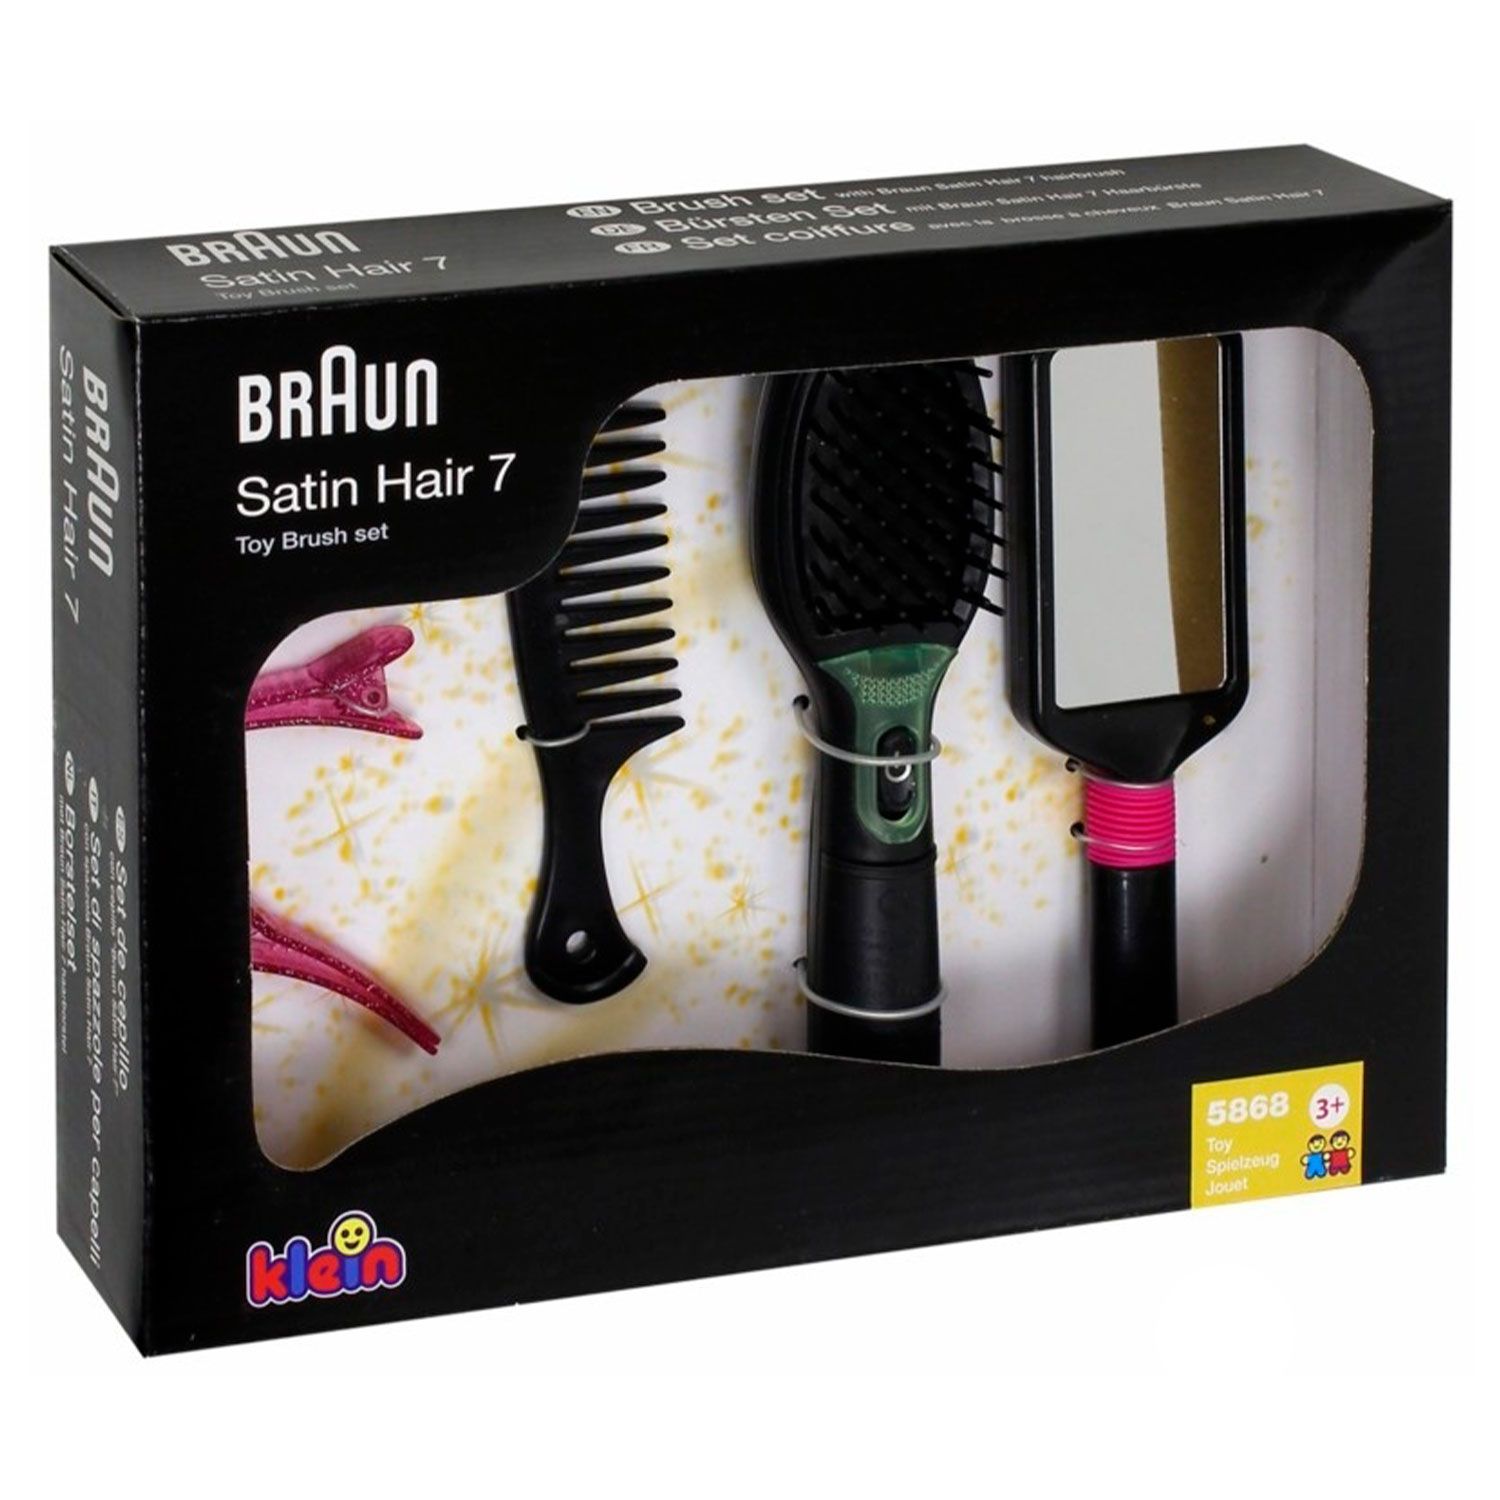 Набор браун. Набор расчесок Braun (5868). Игровой набор Klein "Satin hair. Набор стилиста", 5 предметов. Braun Satin hair расческа. Набор Klein Braun Satin hair.